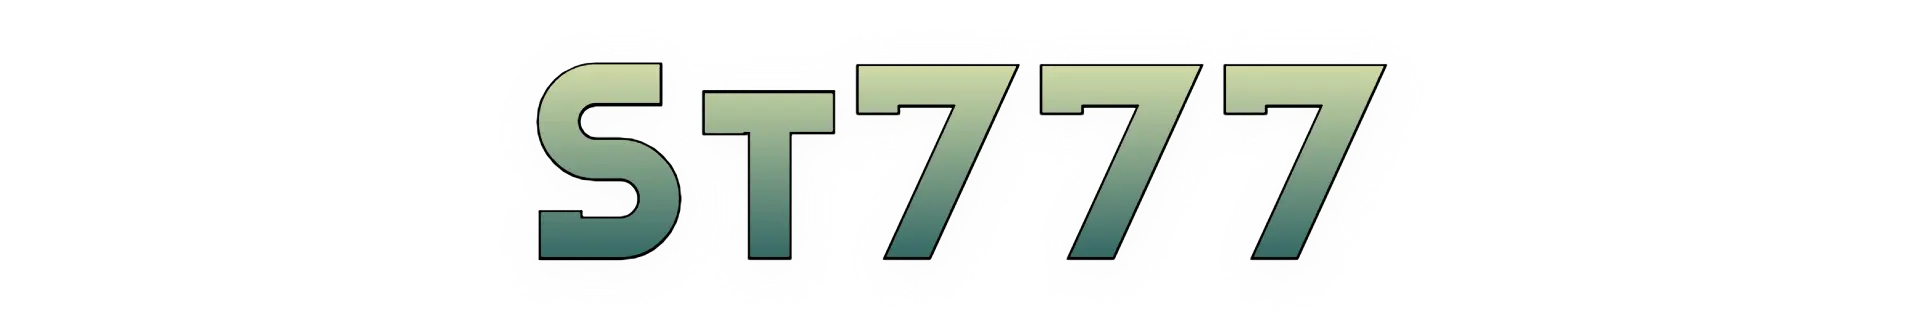 St777